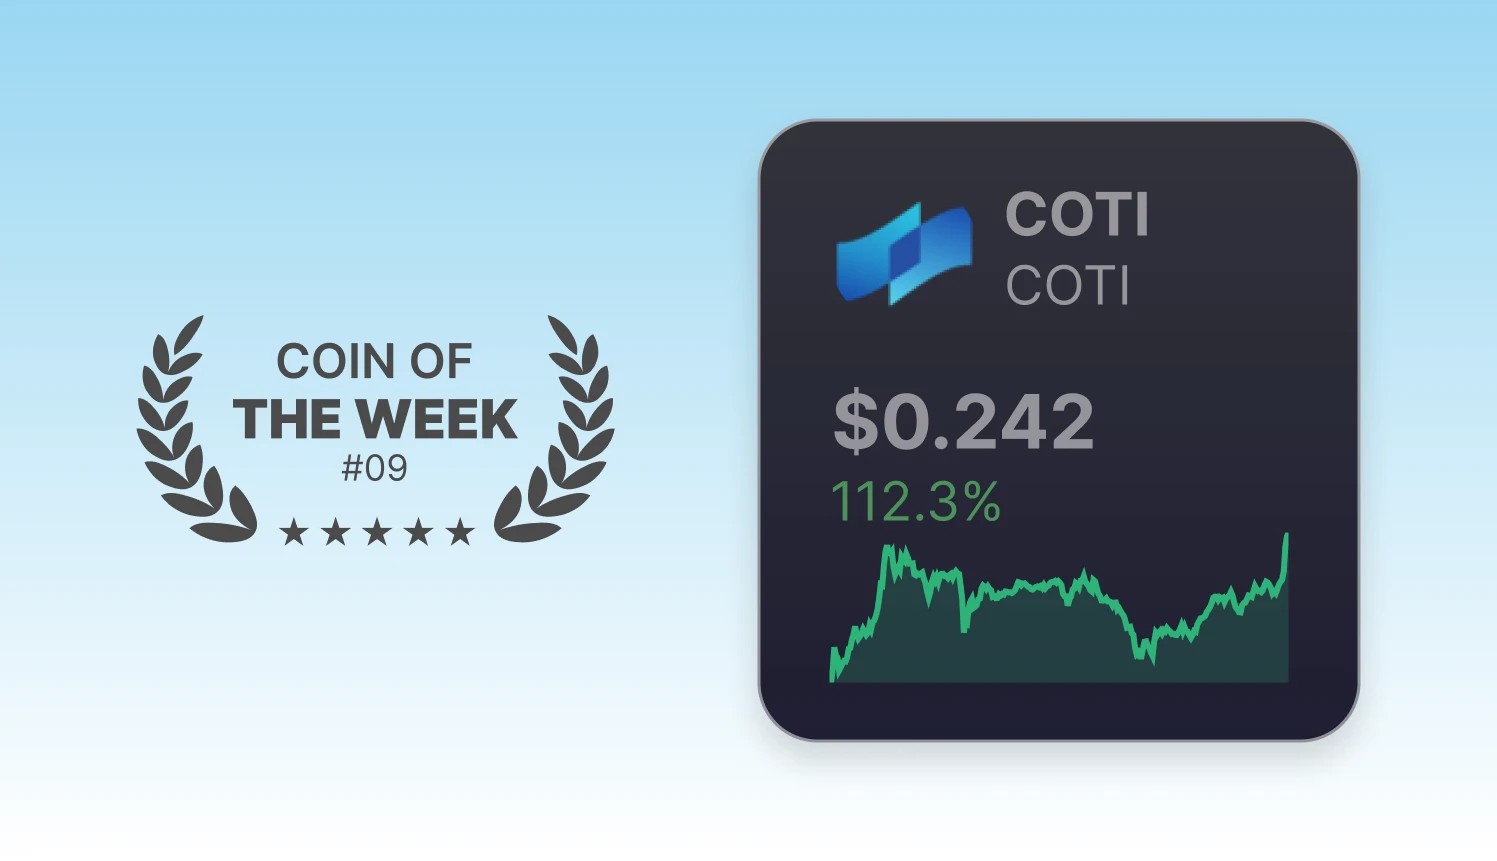 Coin of the Week - COTI - Week 09